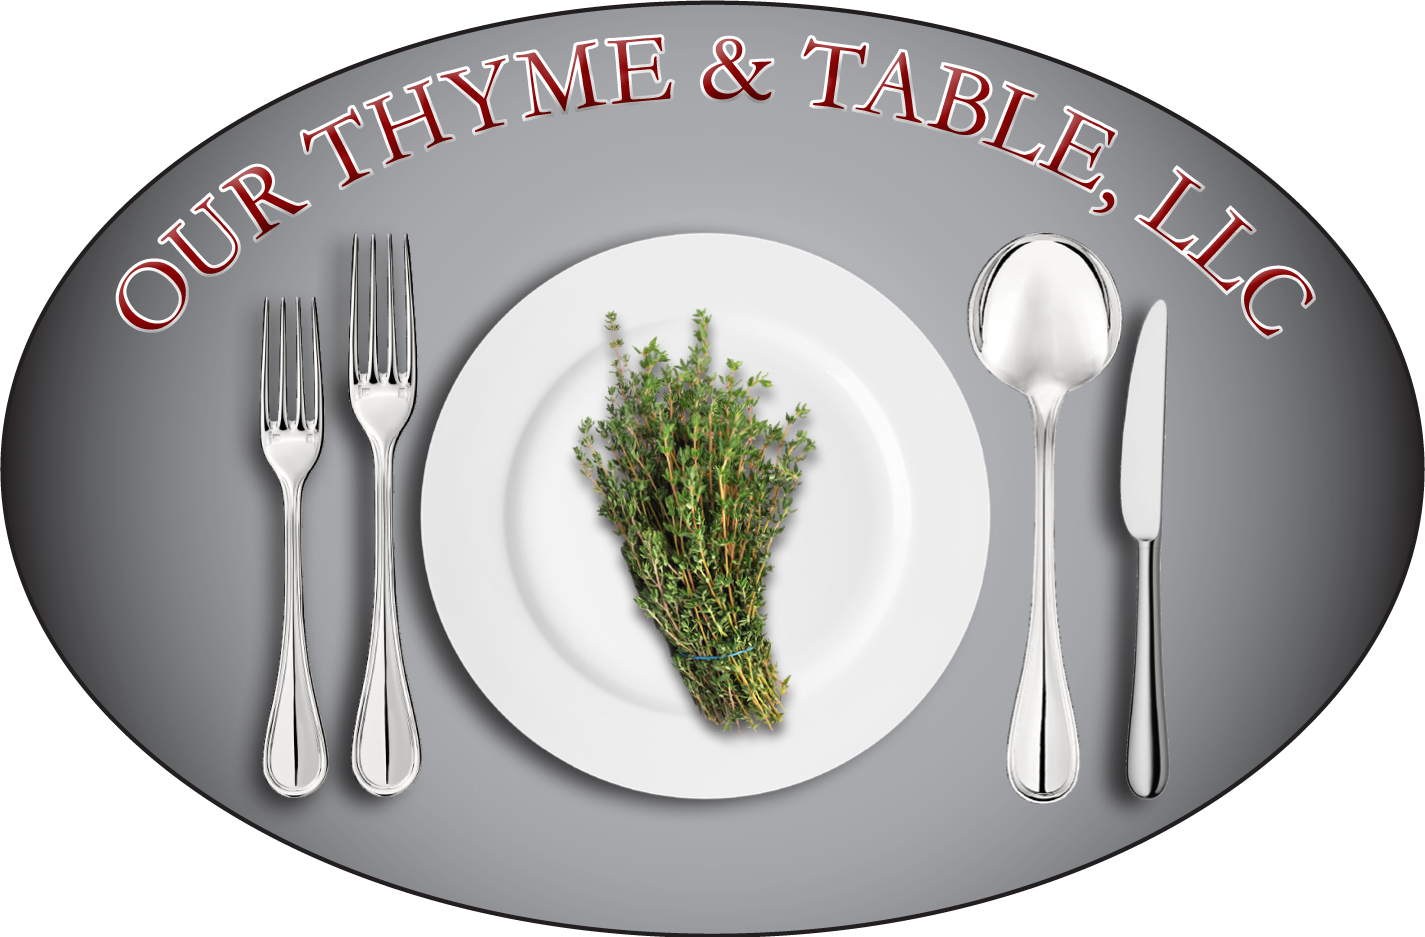 Cutlery – Thyme&Table